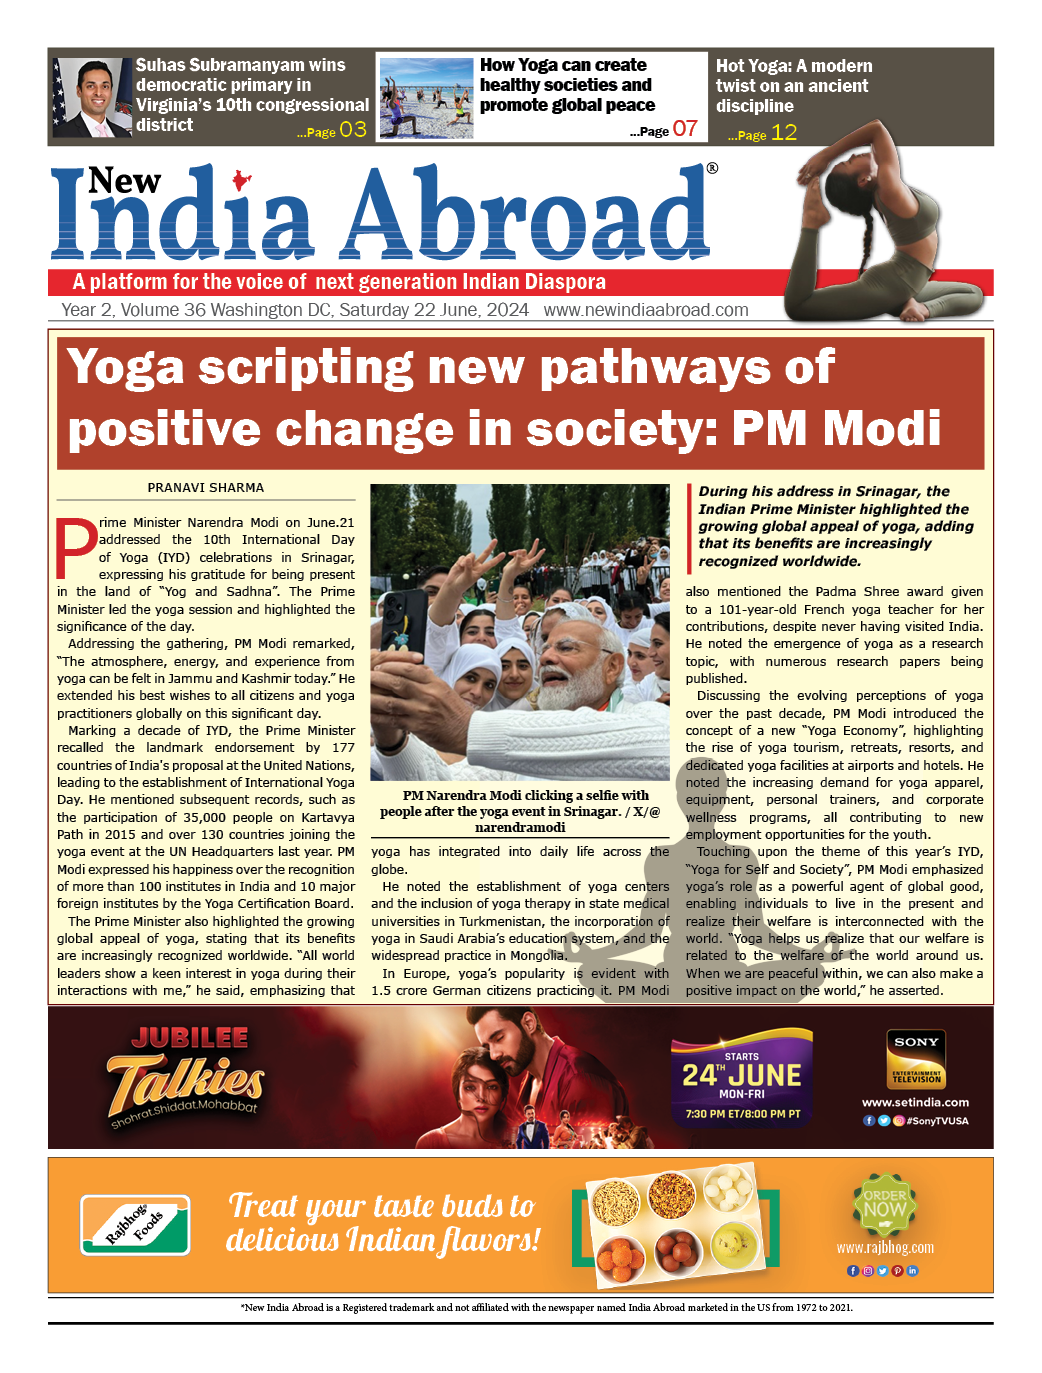 Yoga scripting new pathways of positive change in society, says Modi on International Yoga Day